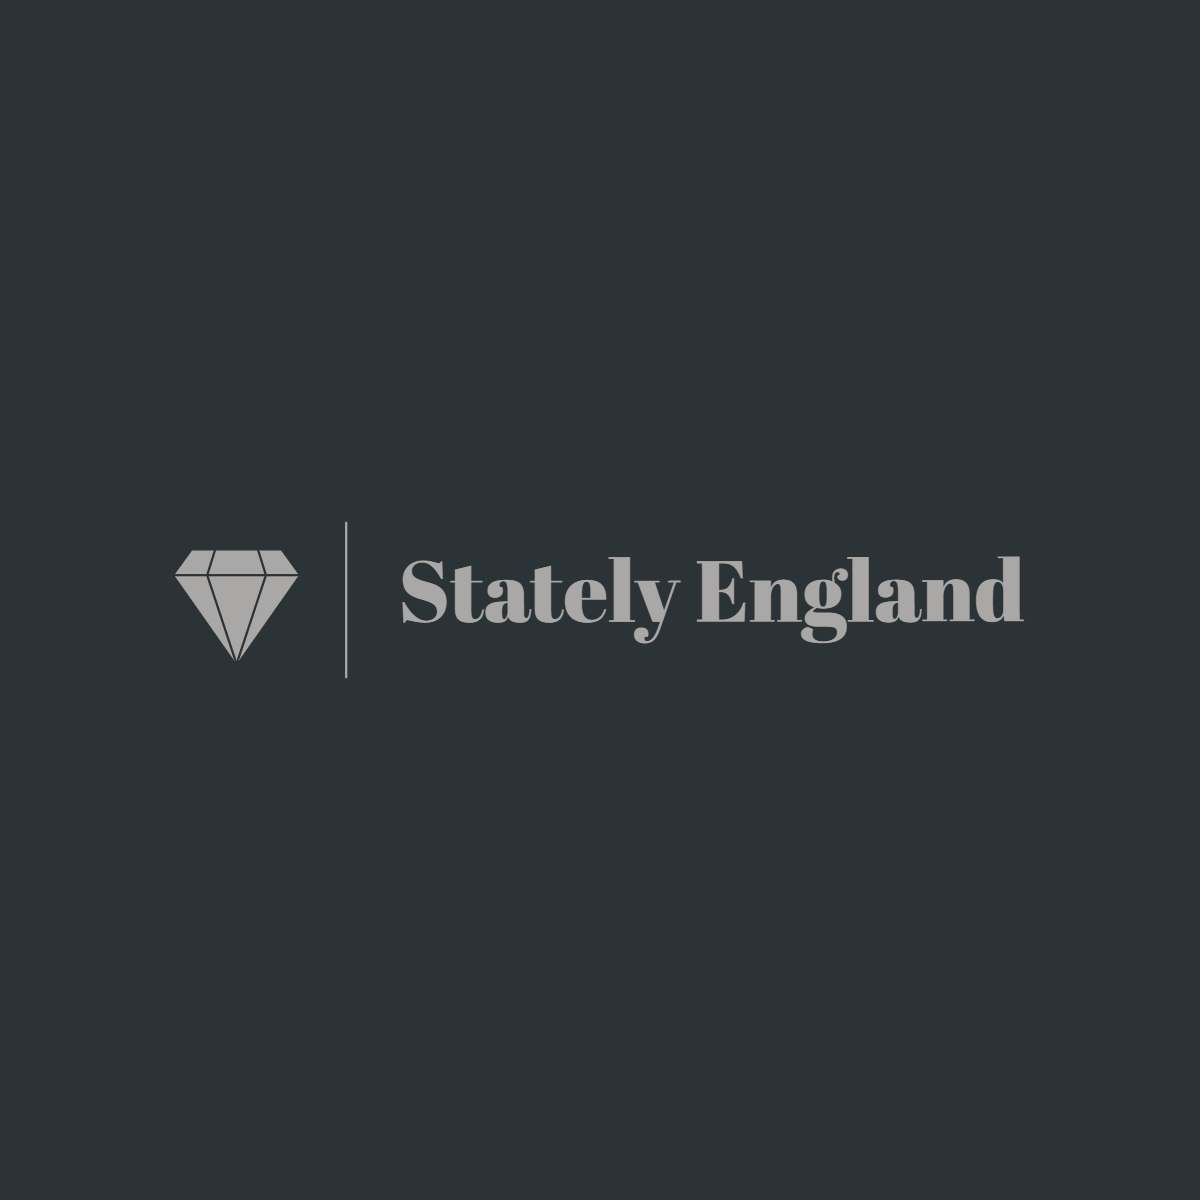 Stately England-logos